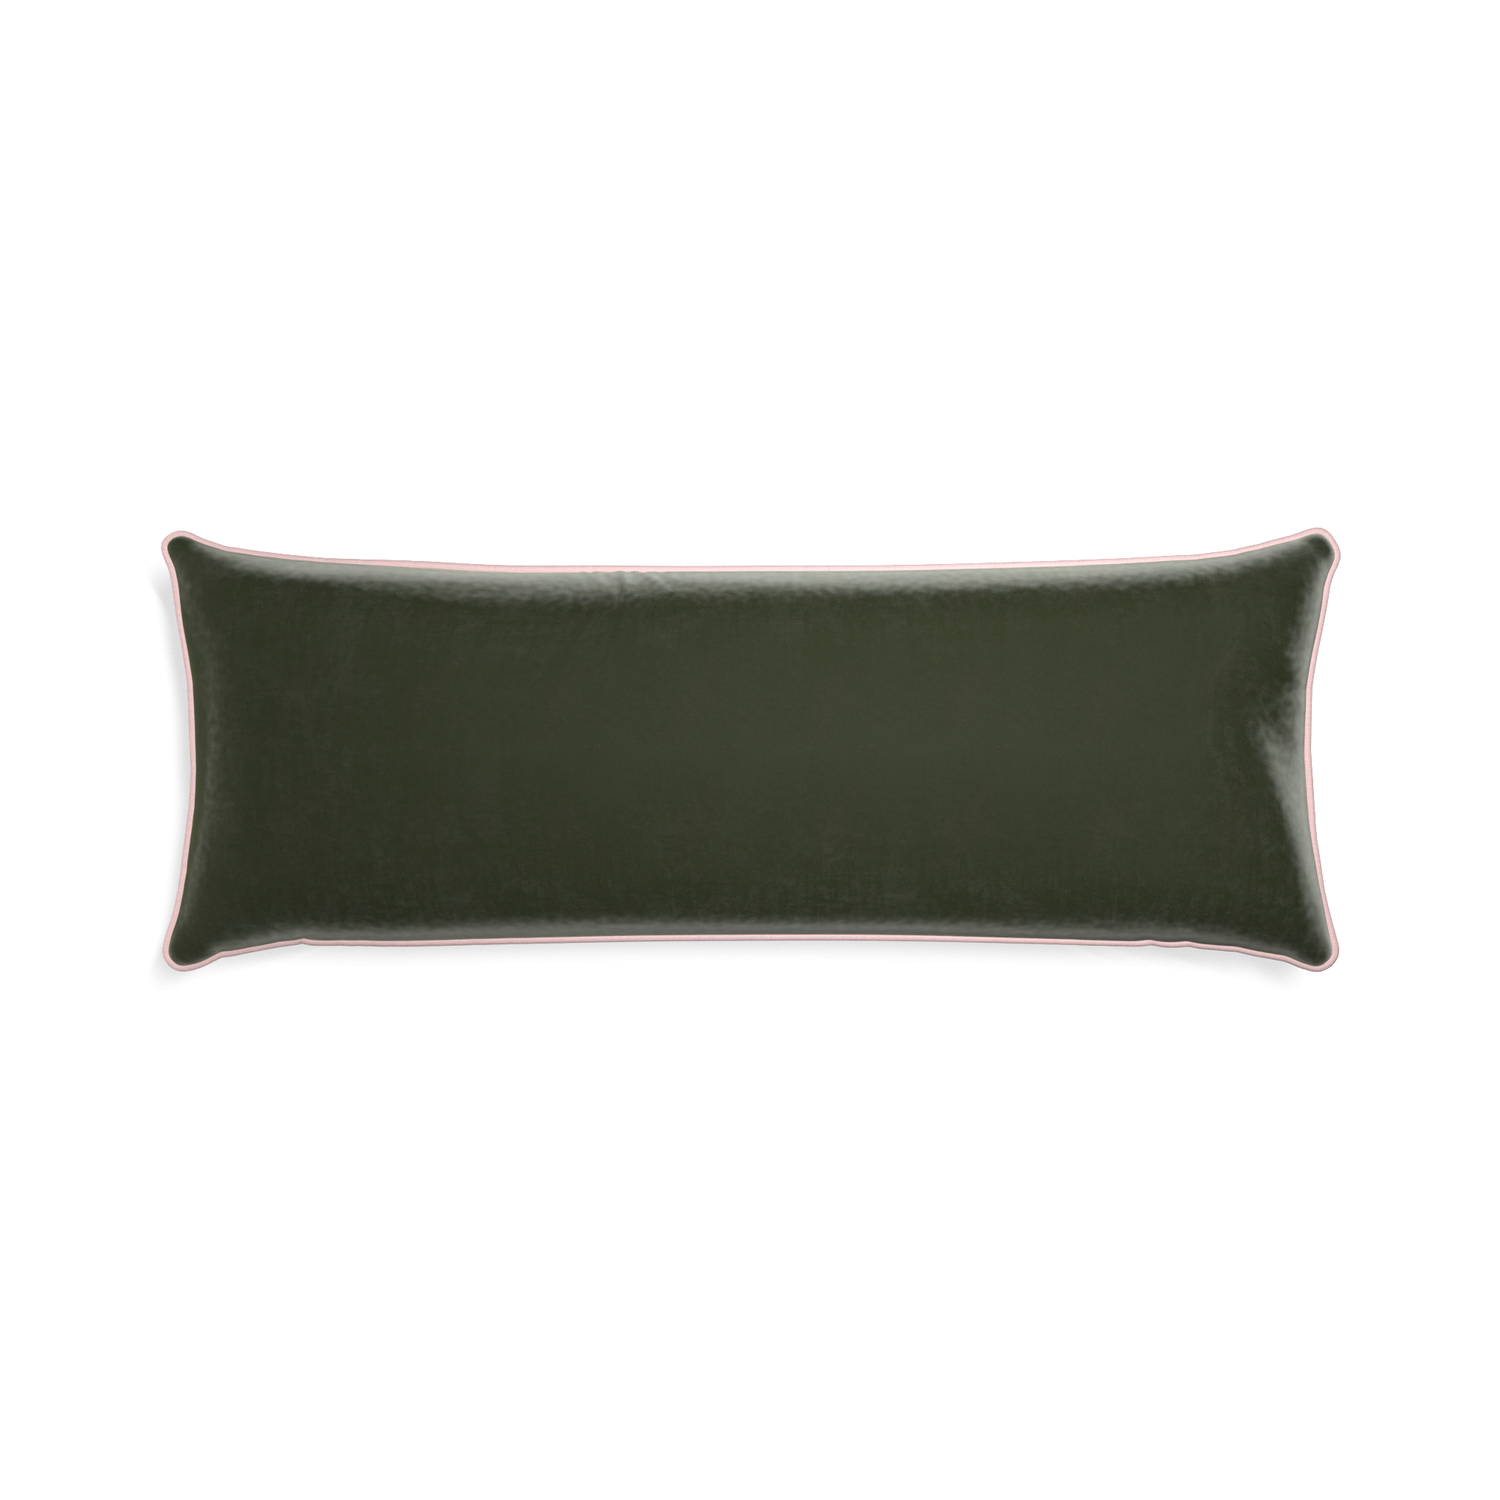 rectangle fern green velvet pillow with light pink piping